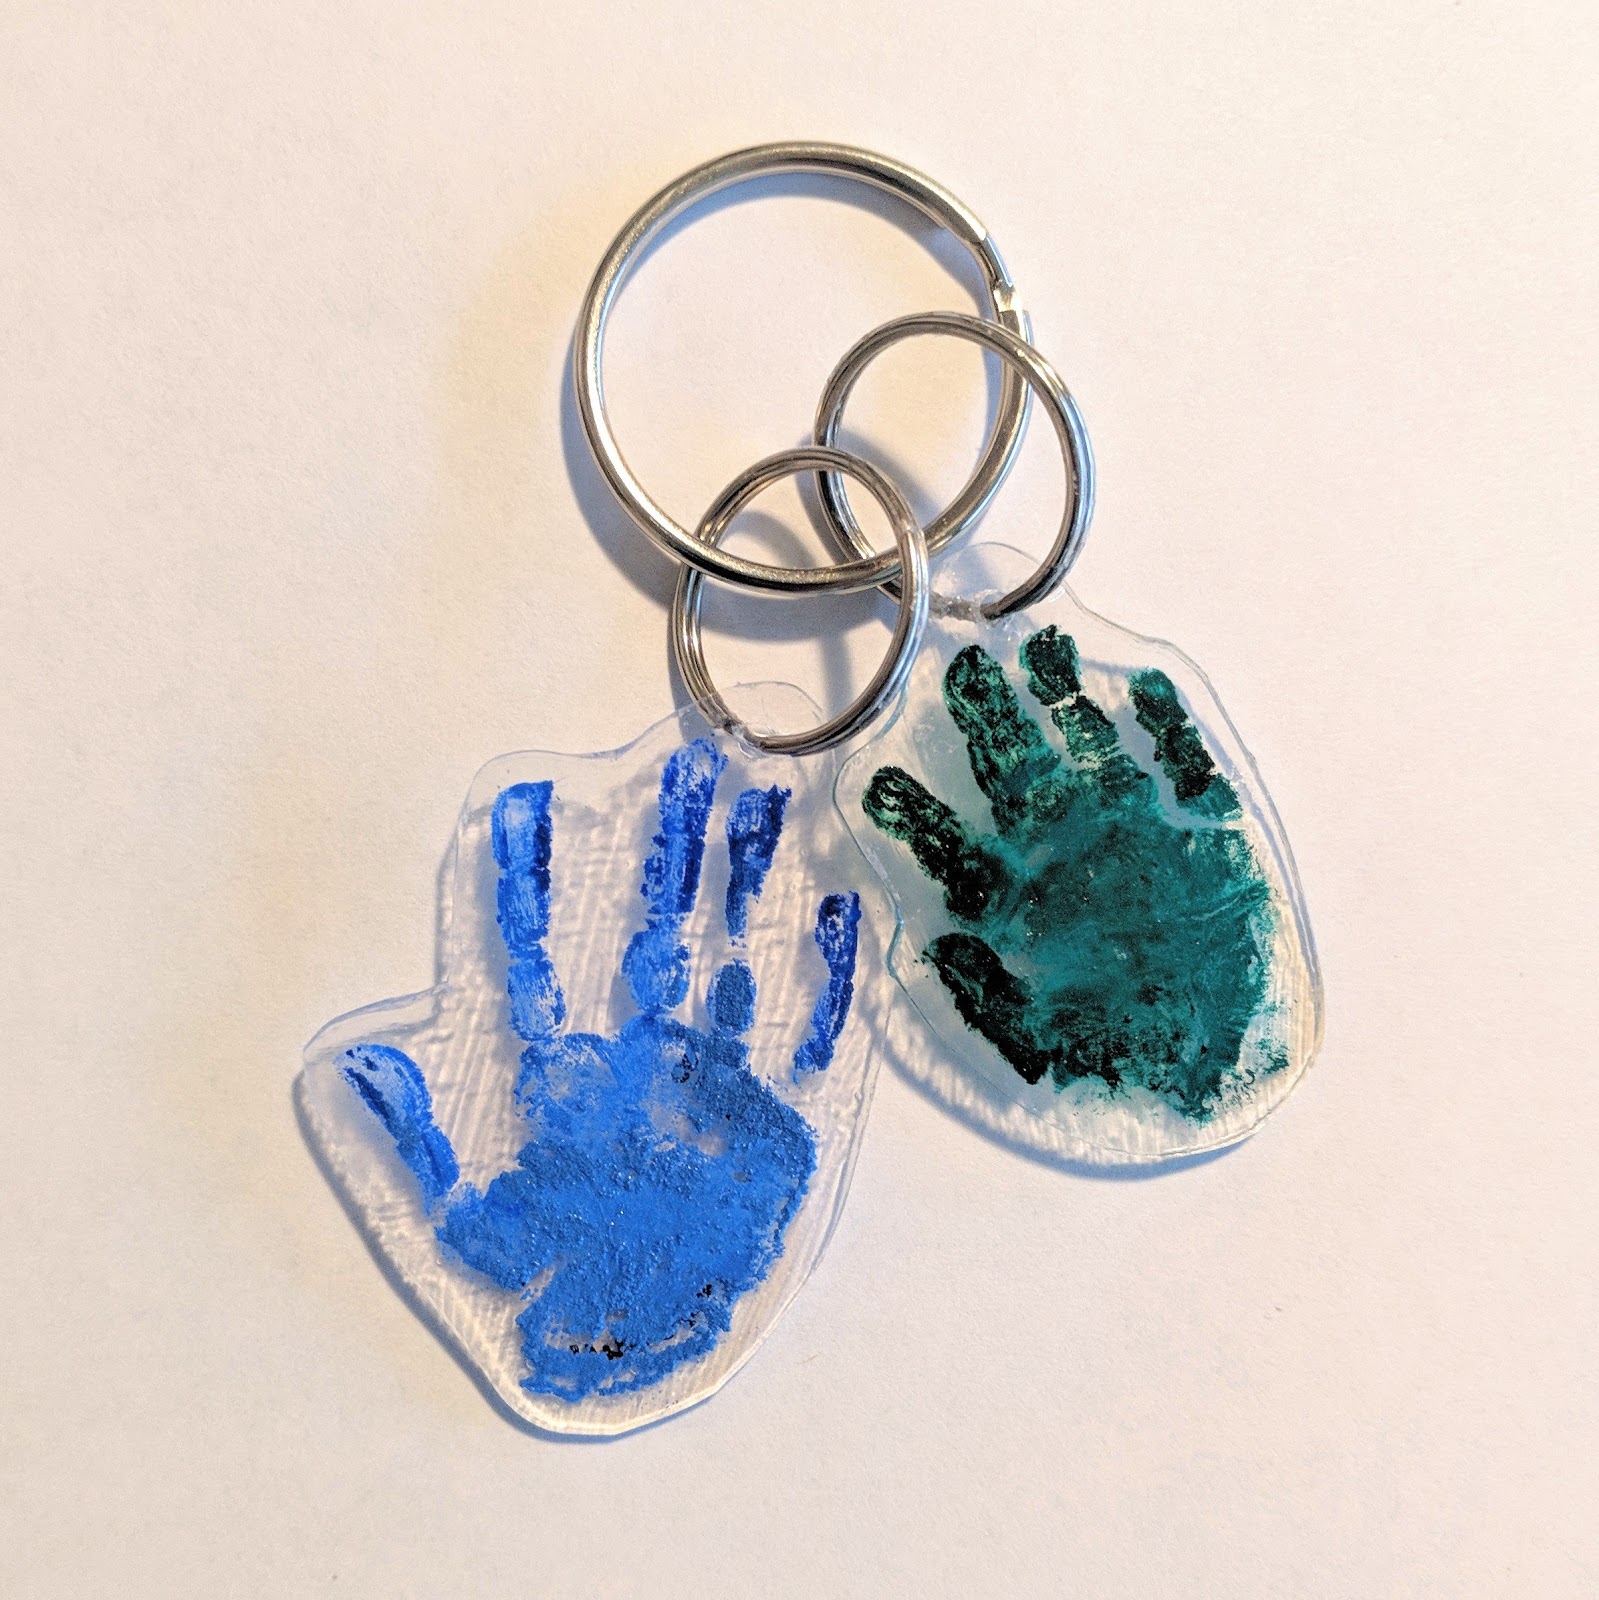 How to Make a Shrinky Dink Handprint Keychain